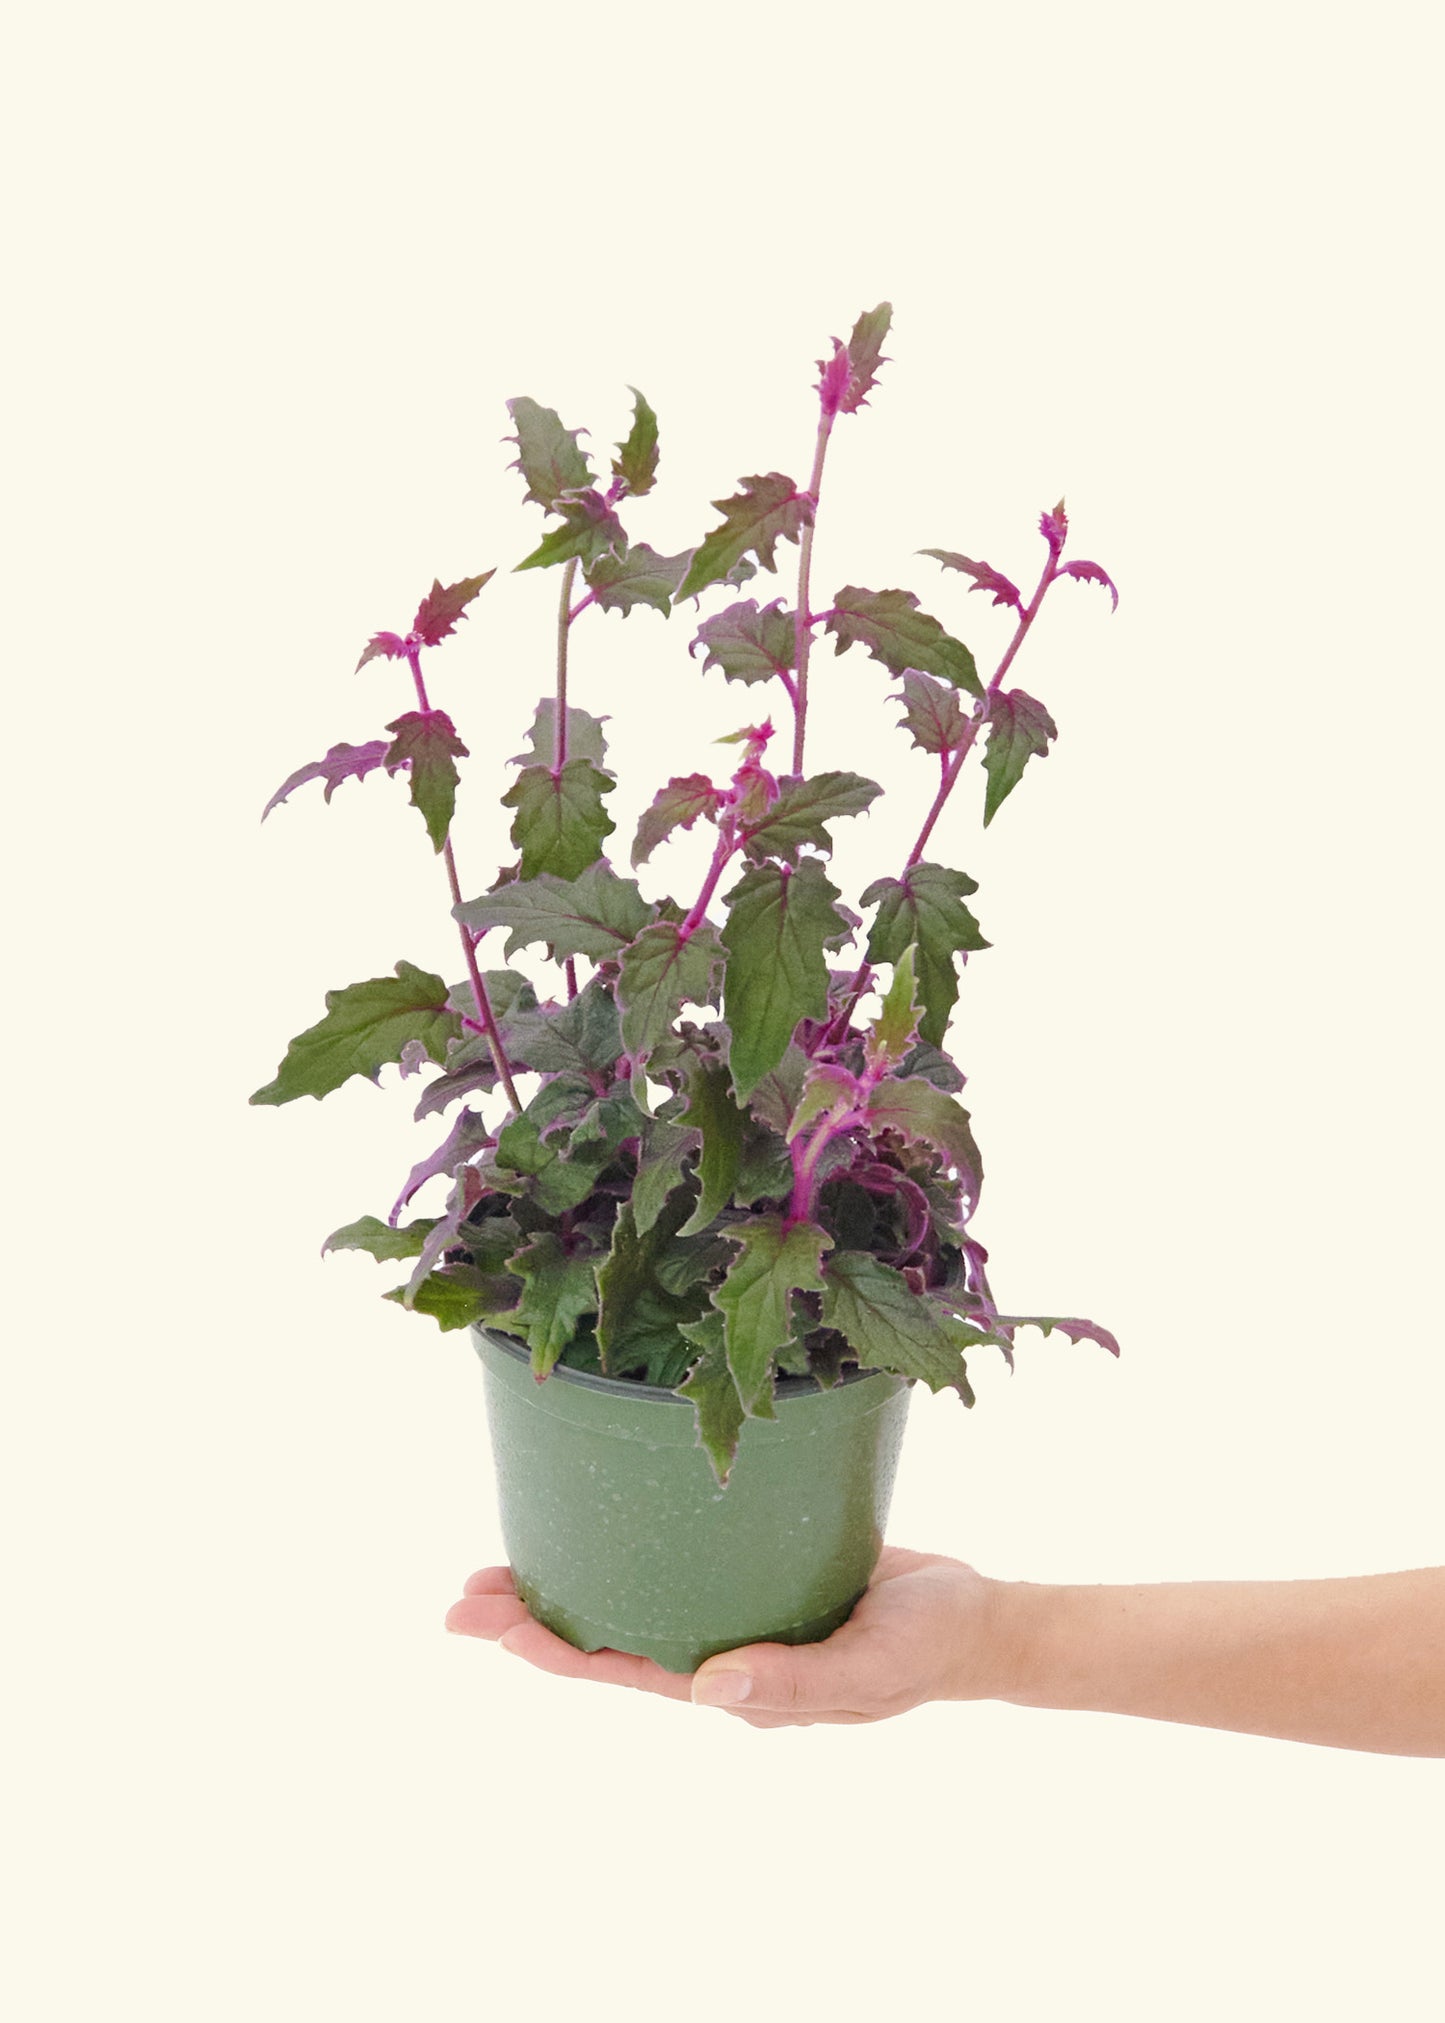 Medium Purple Passion Plant in a grow pot.